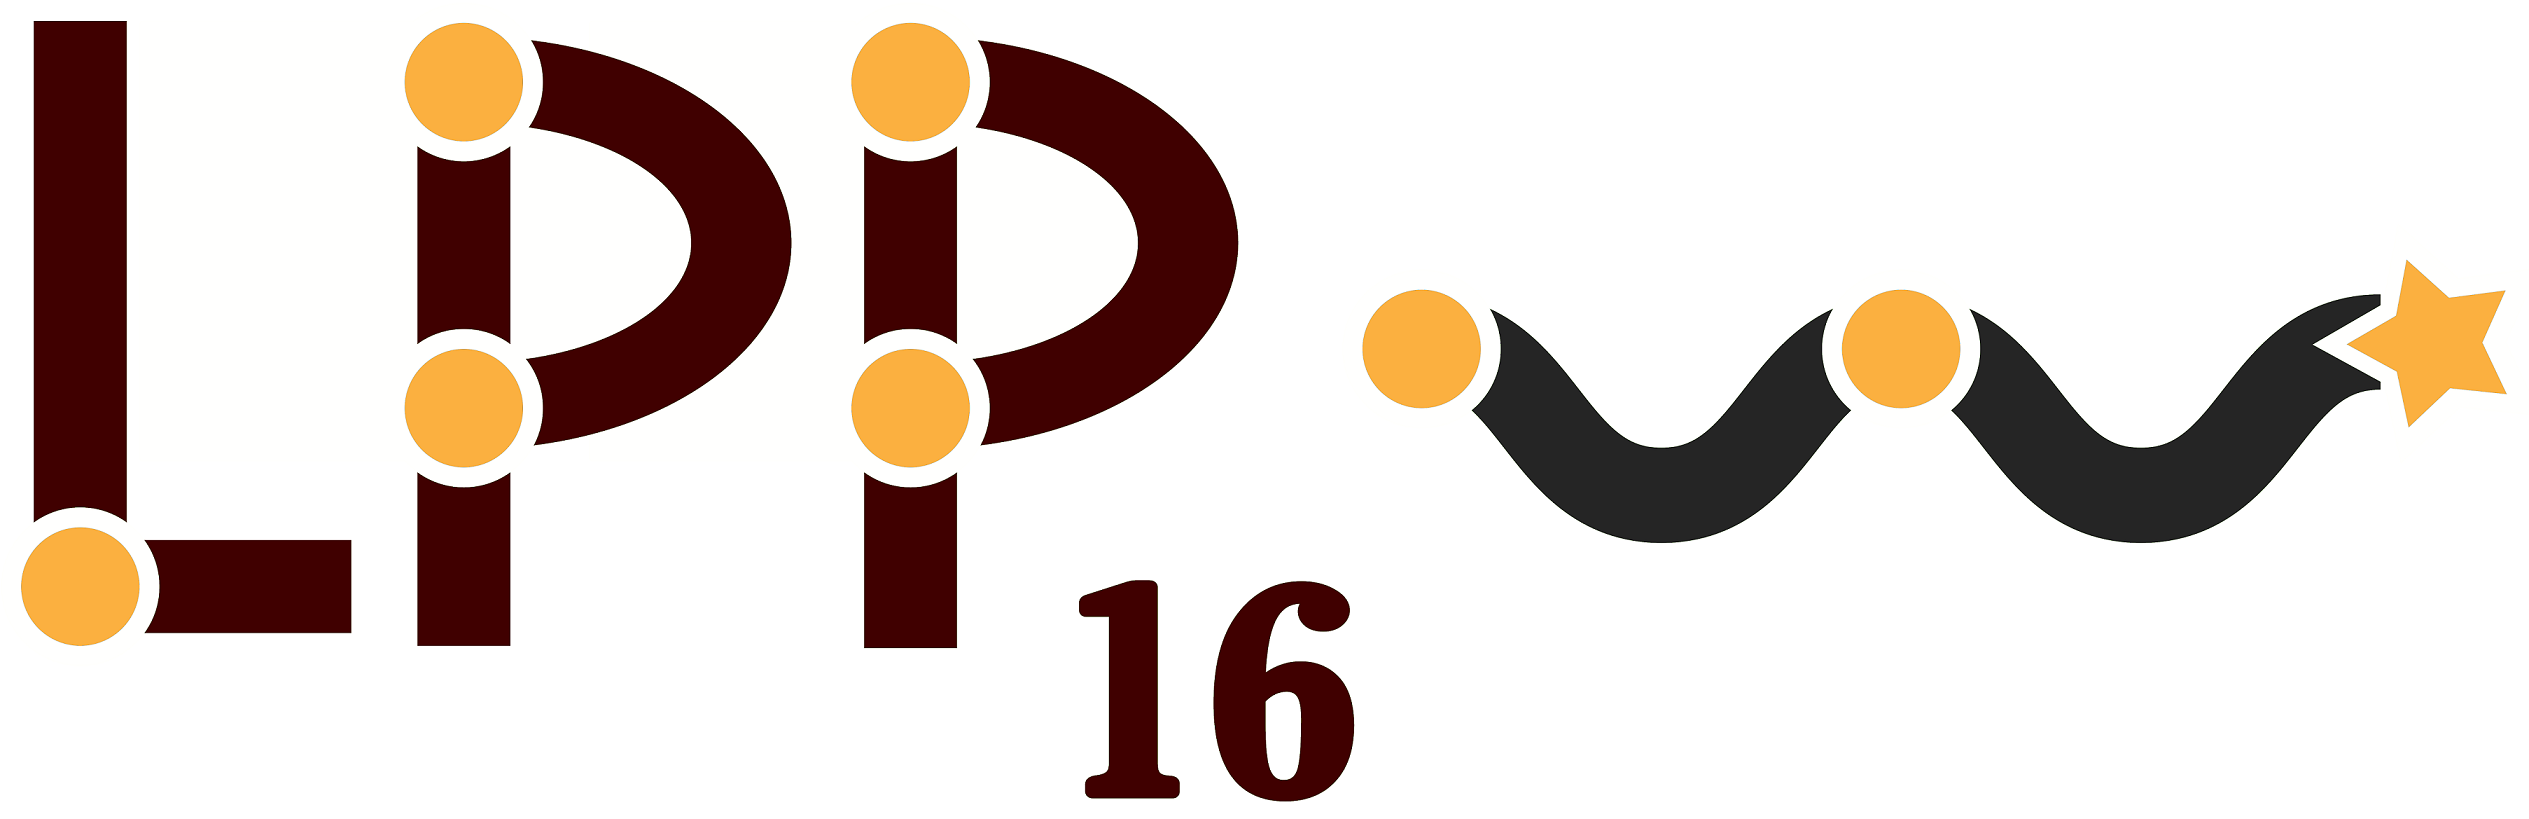 LPP16 logo